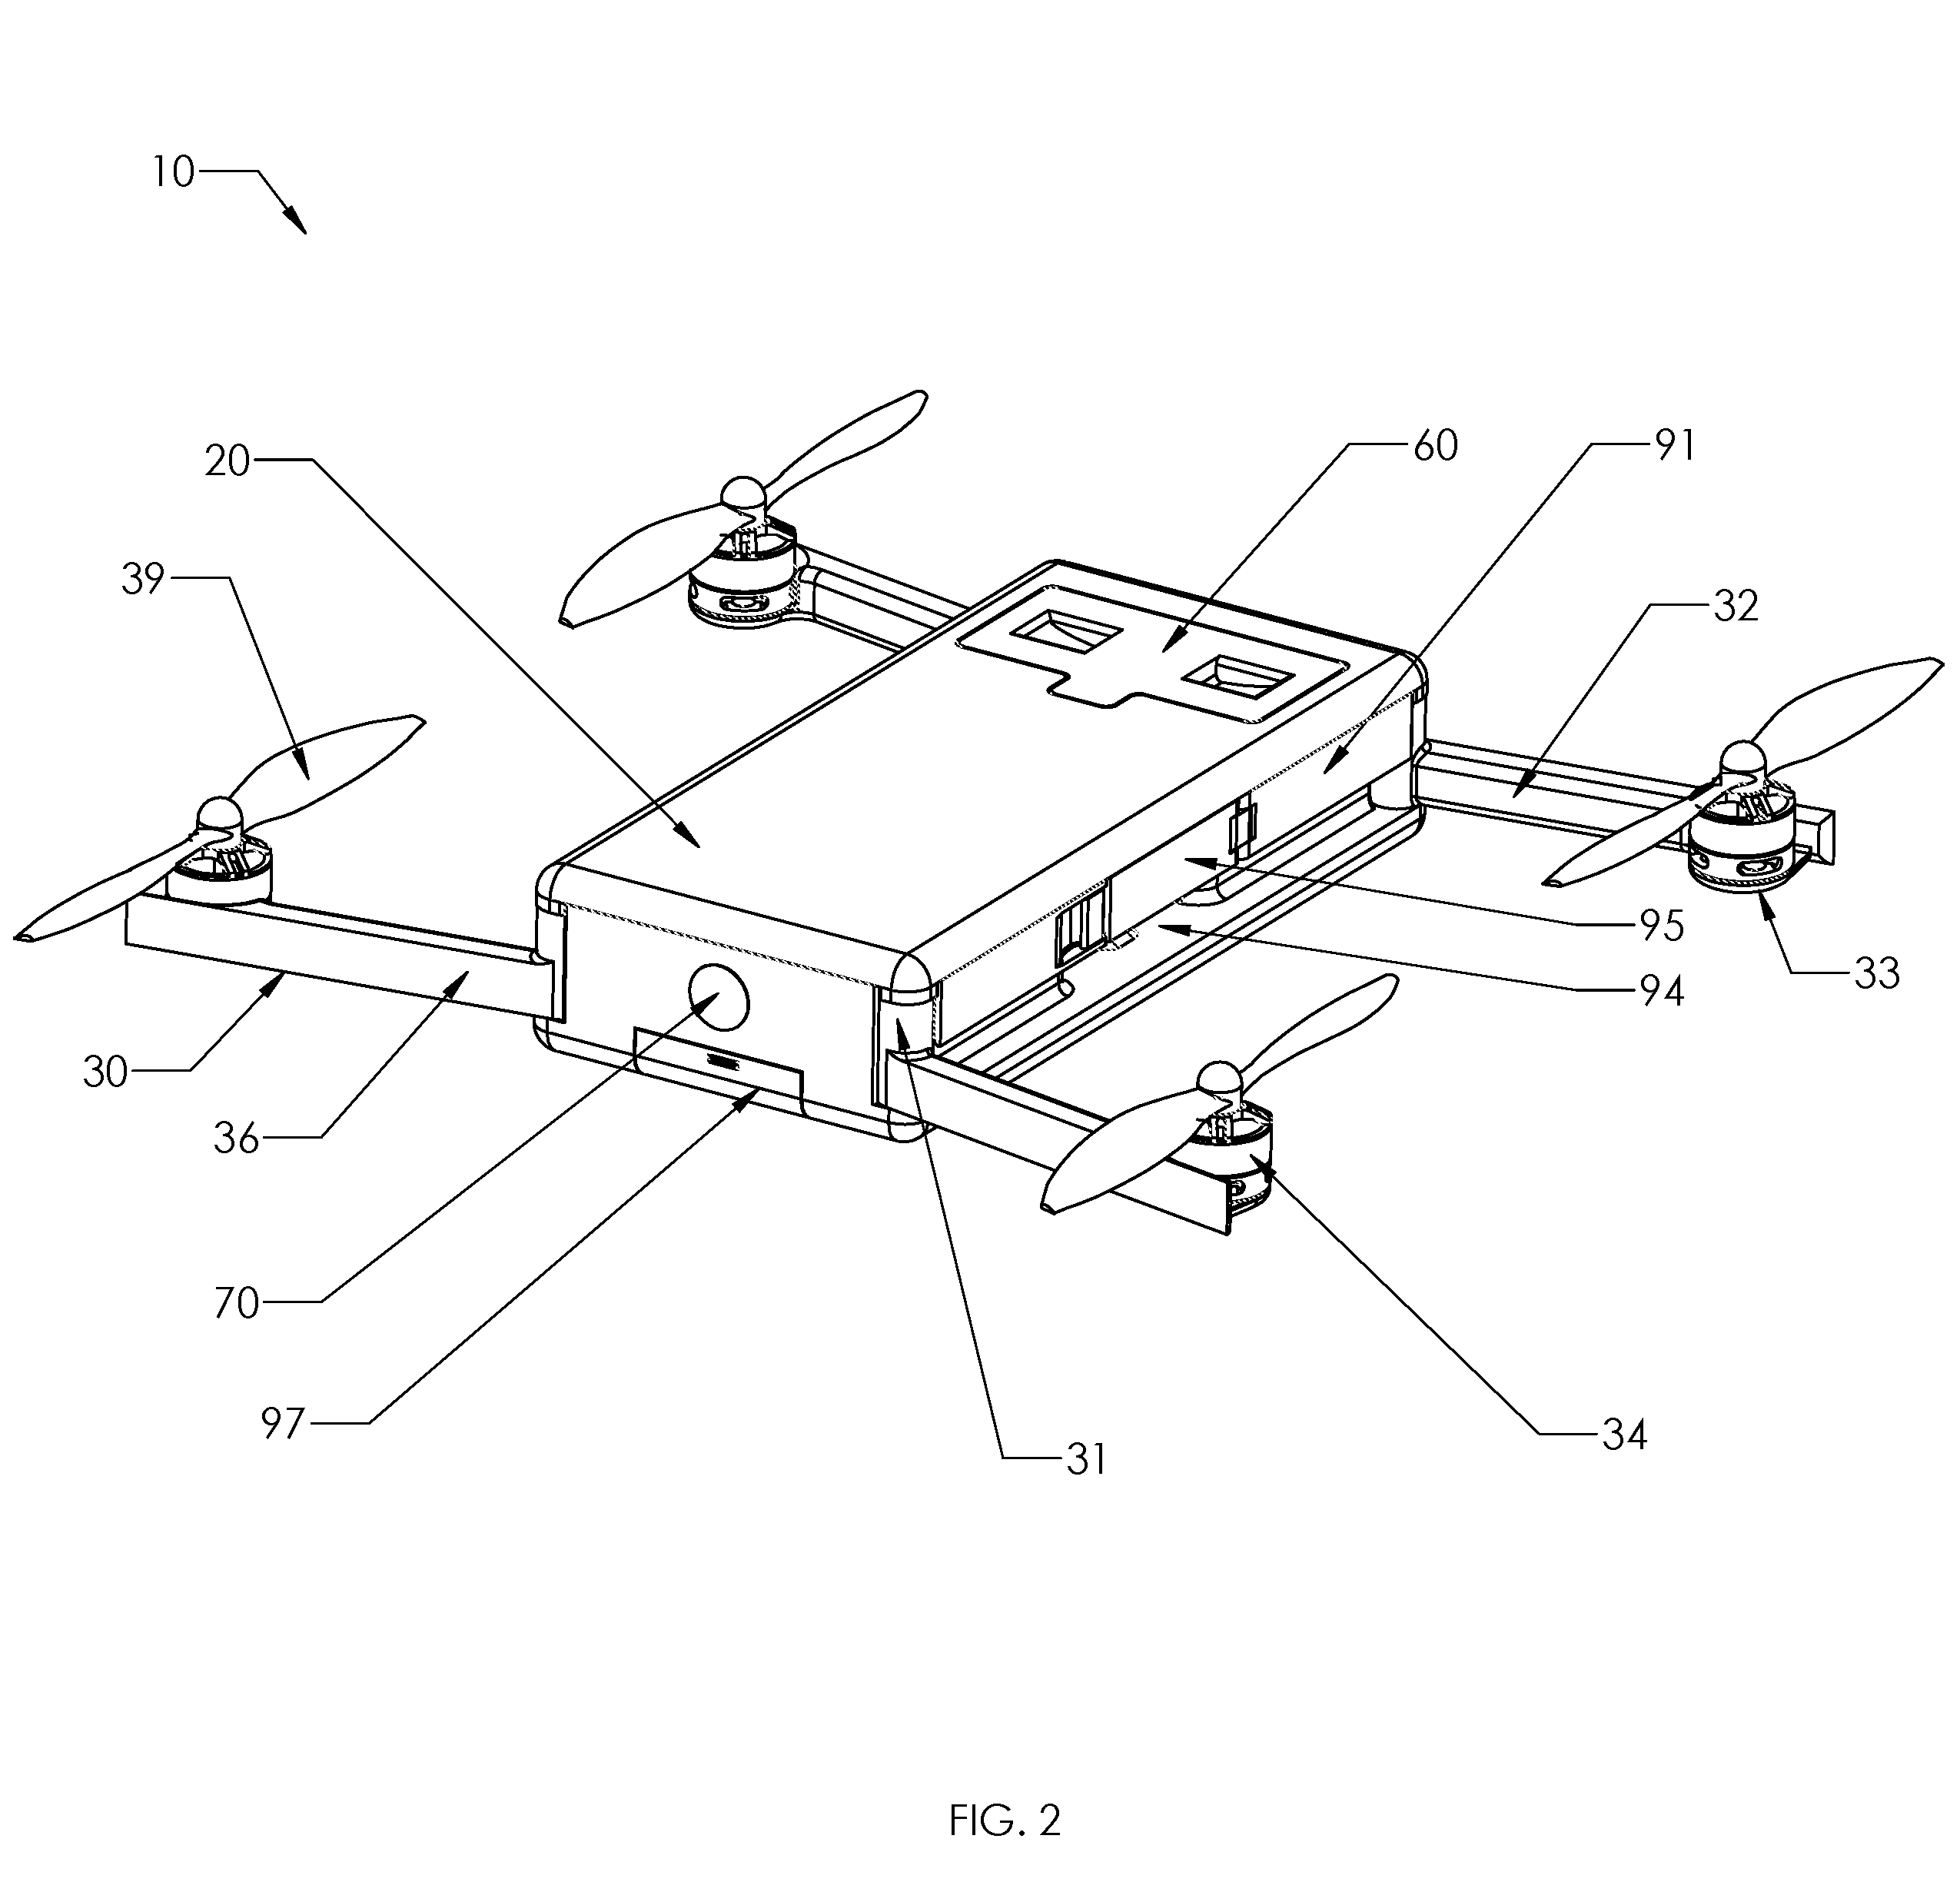 Self-enclosed air vehicle